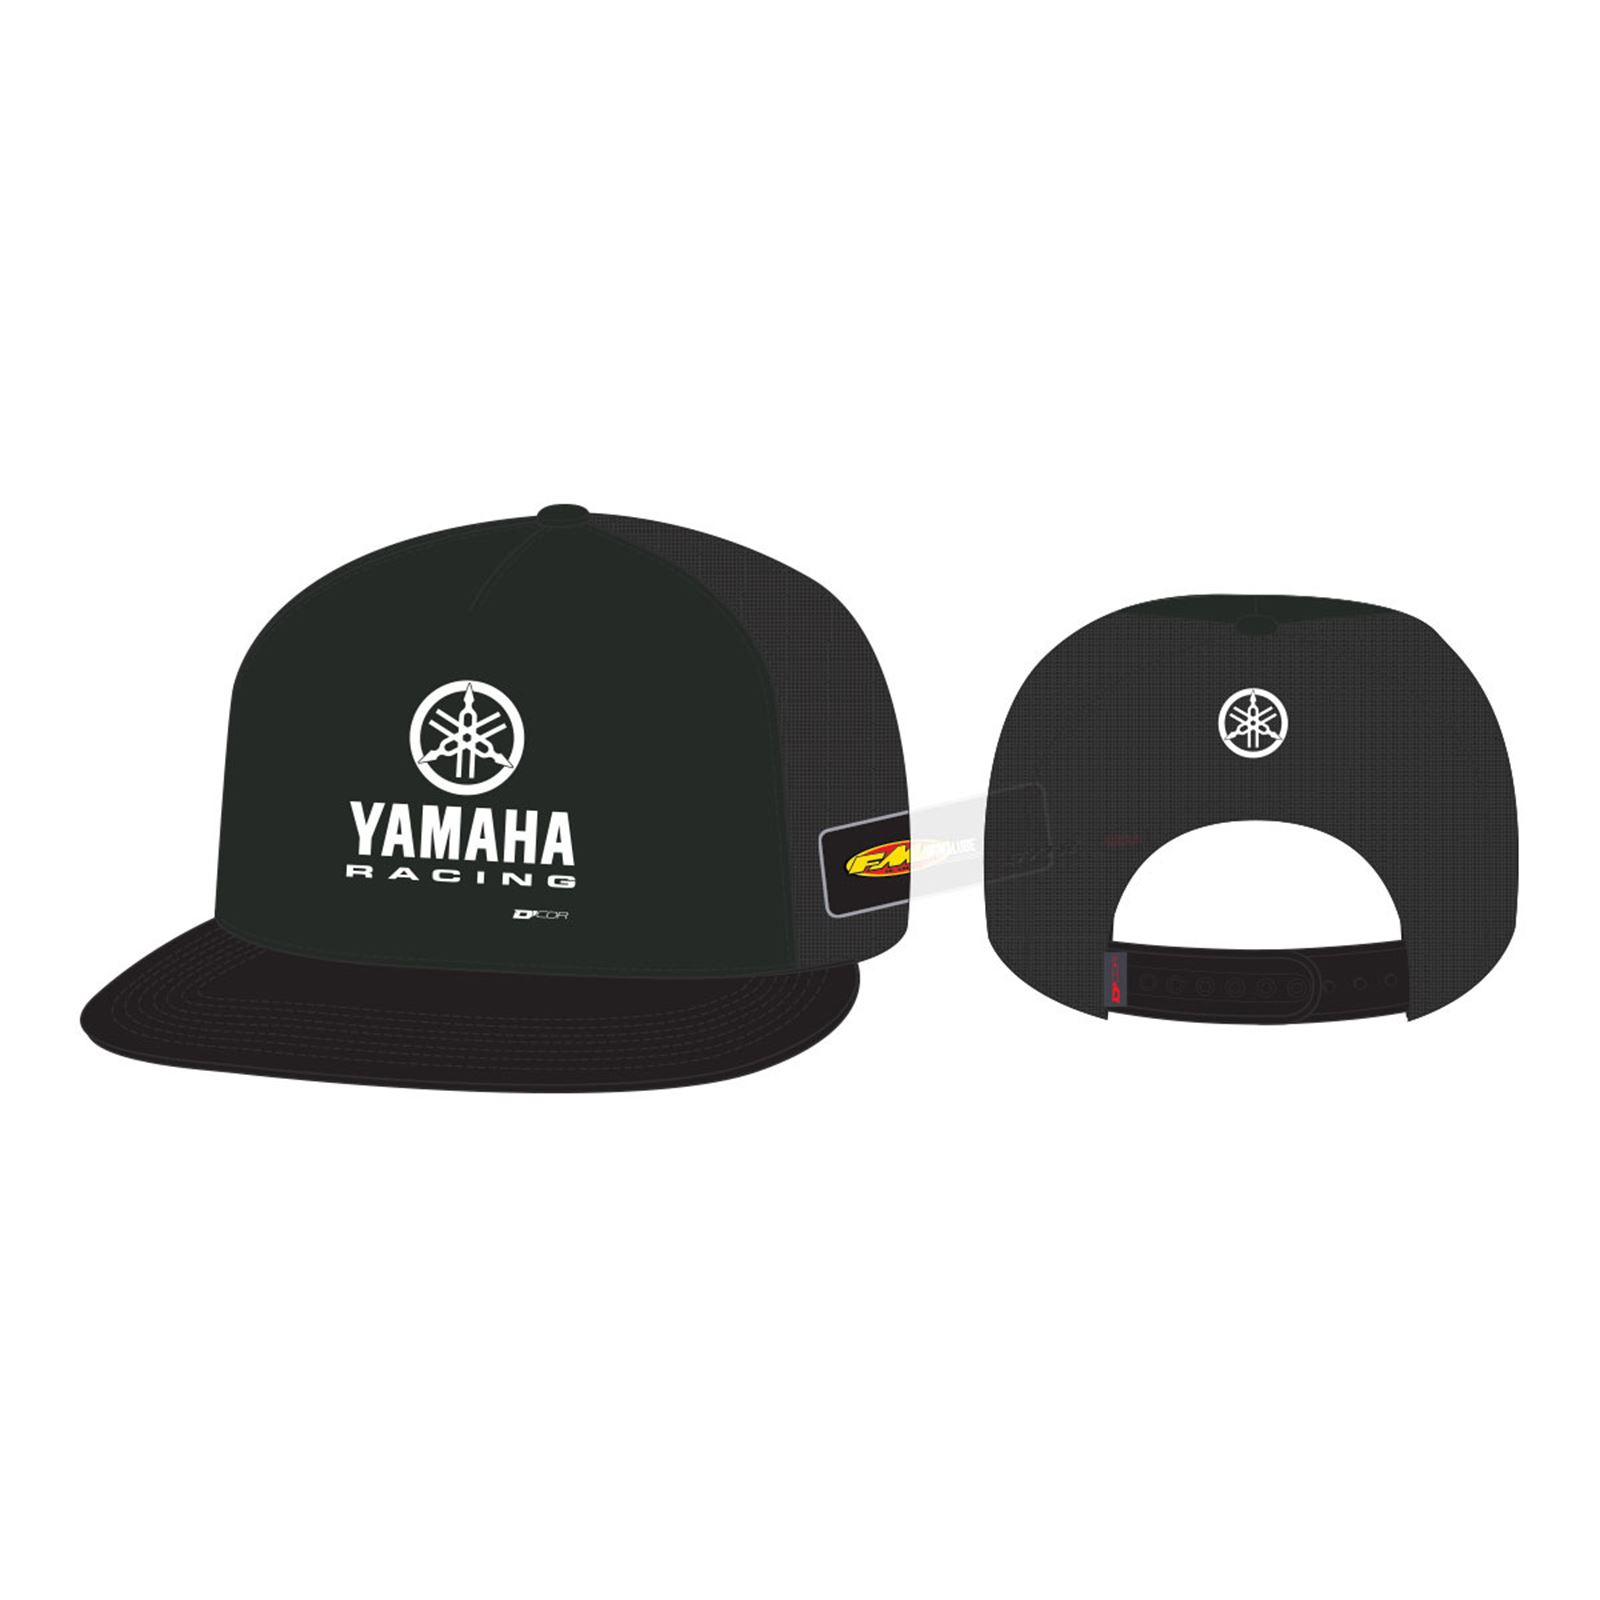 New Authentic Yamaha 100% Cotton One Size Red Hat with White Yamaha Logo 